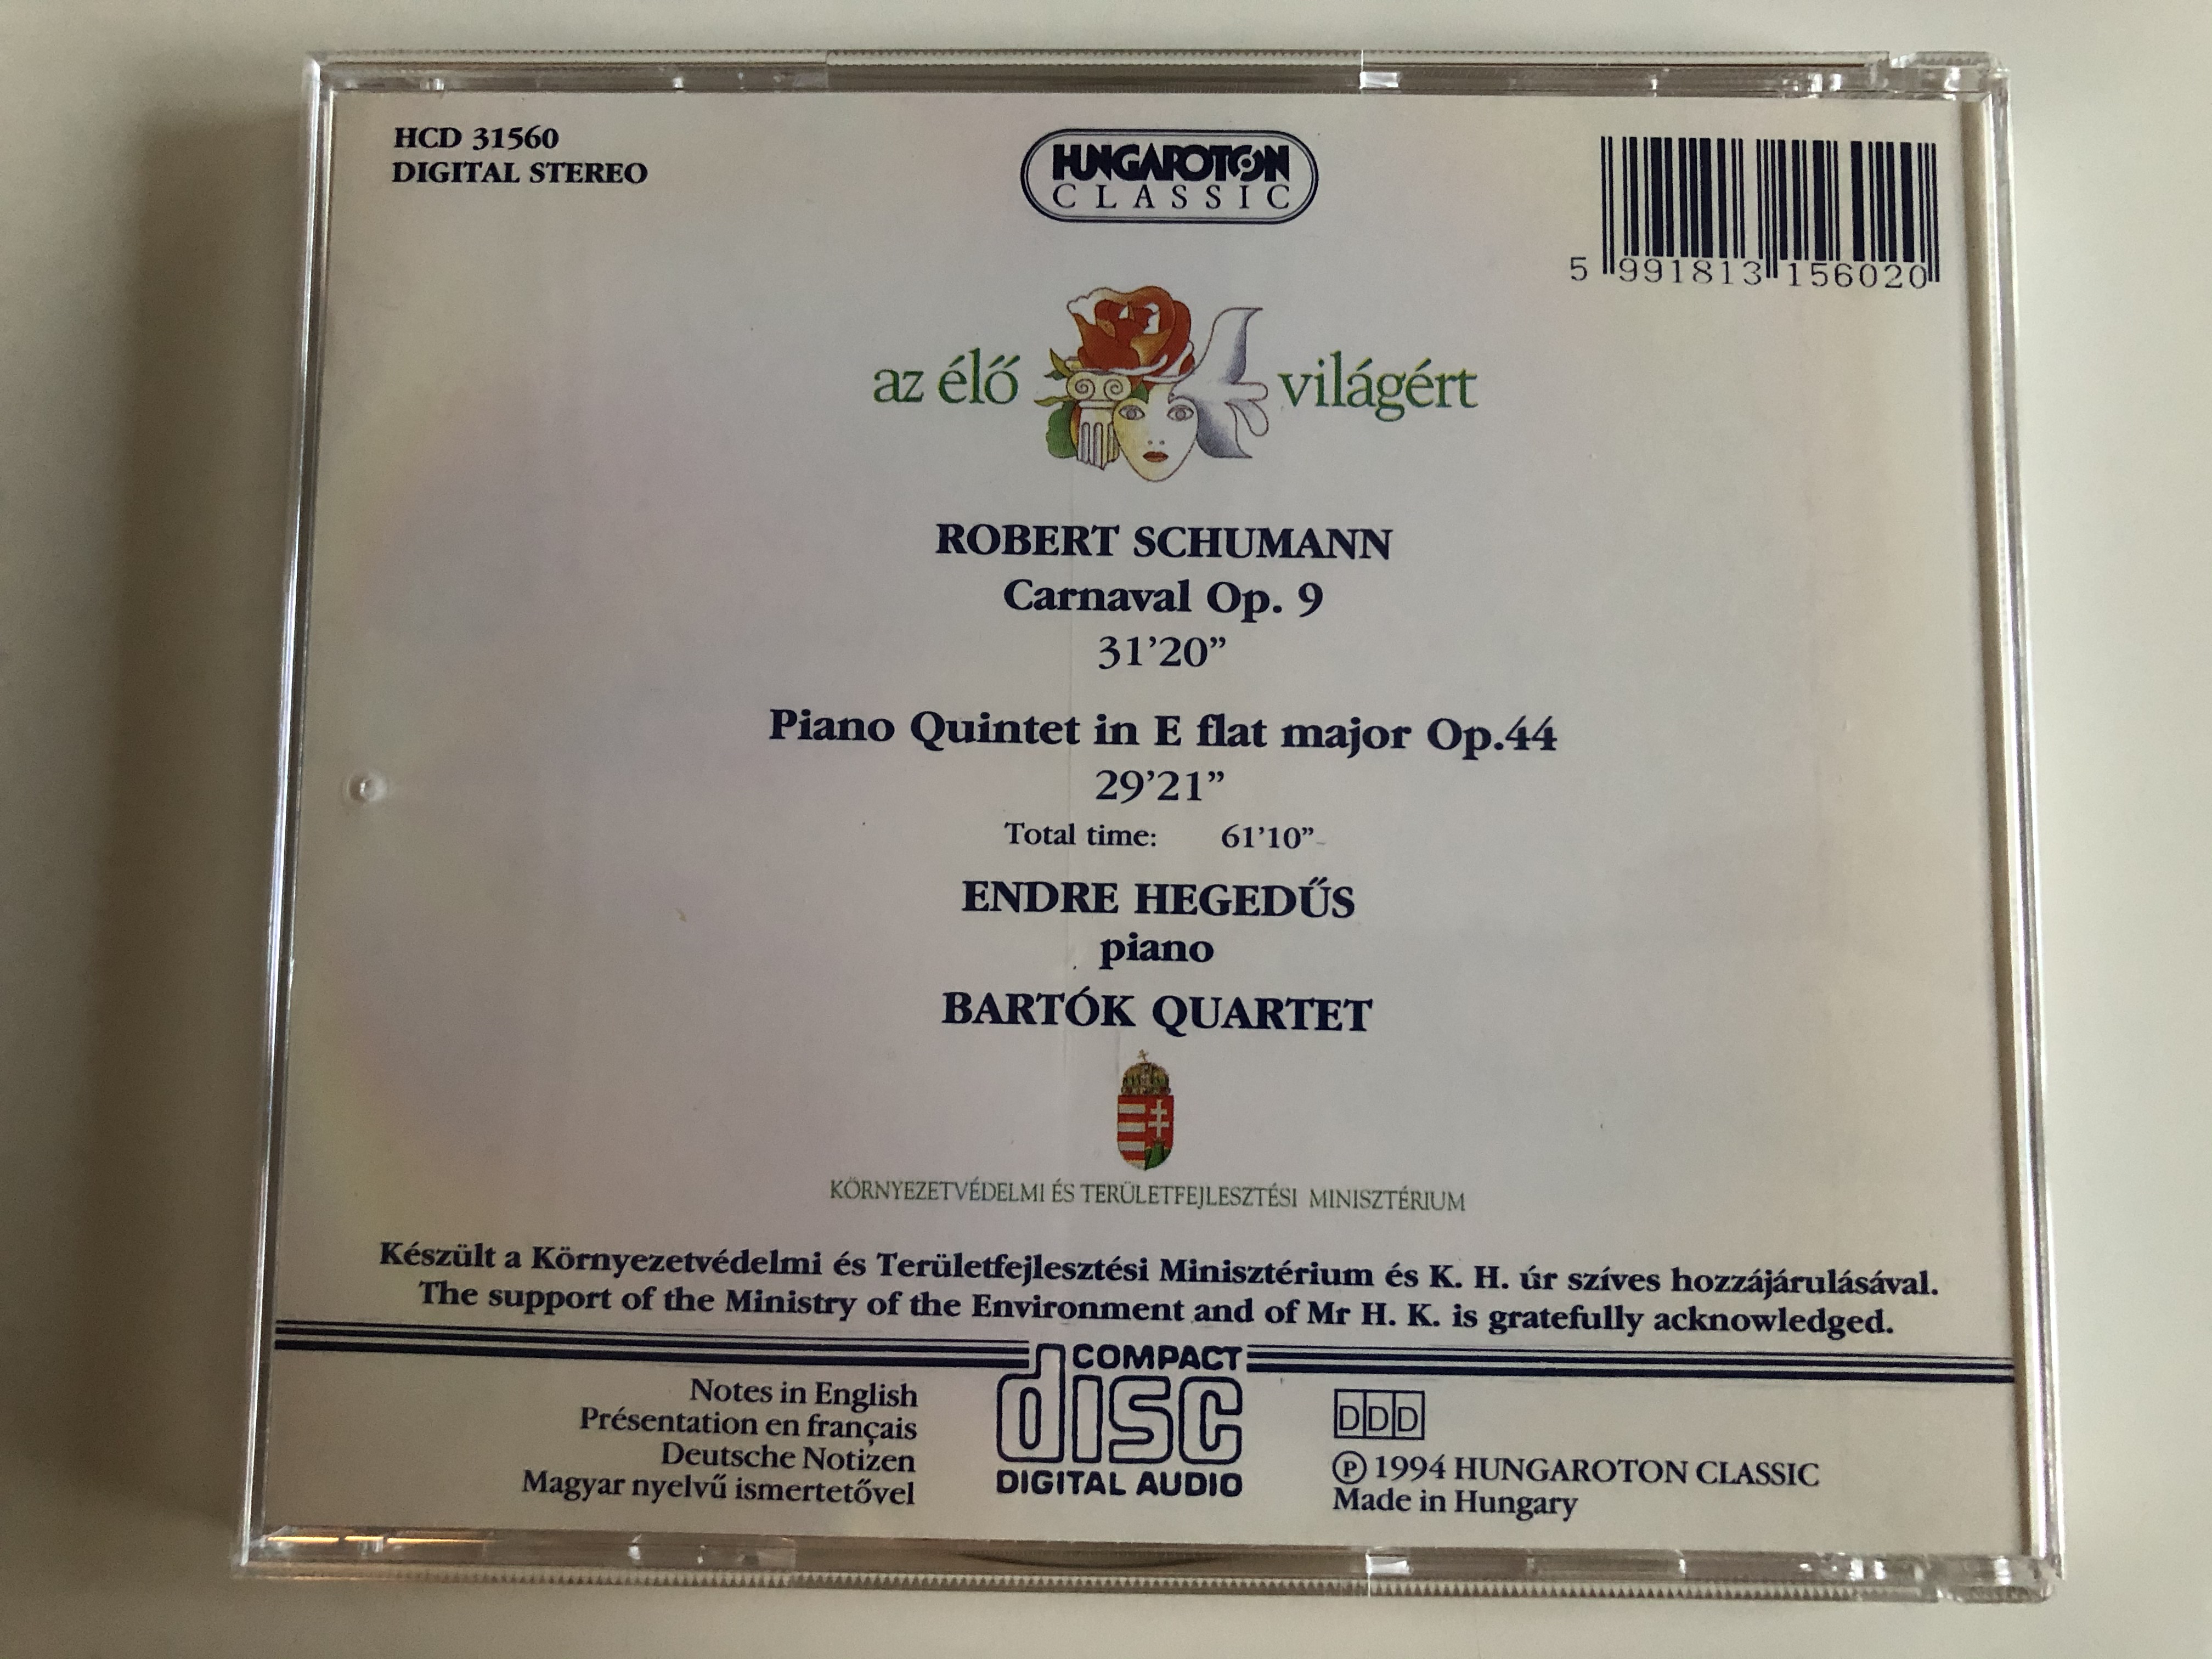 schumann-carnaval-piano-quartet-endre-heged-s-bart-k-quartet-hungaroton-classic-audio-cd-1994-stereo-hcd-31560-7-.jpg